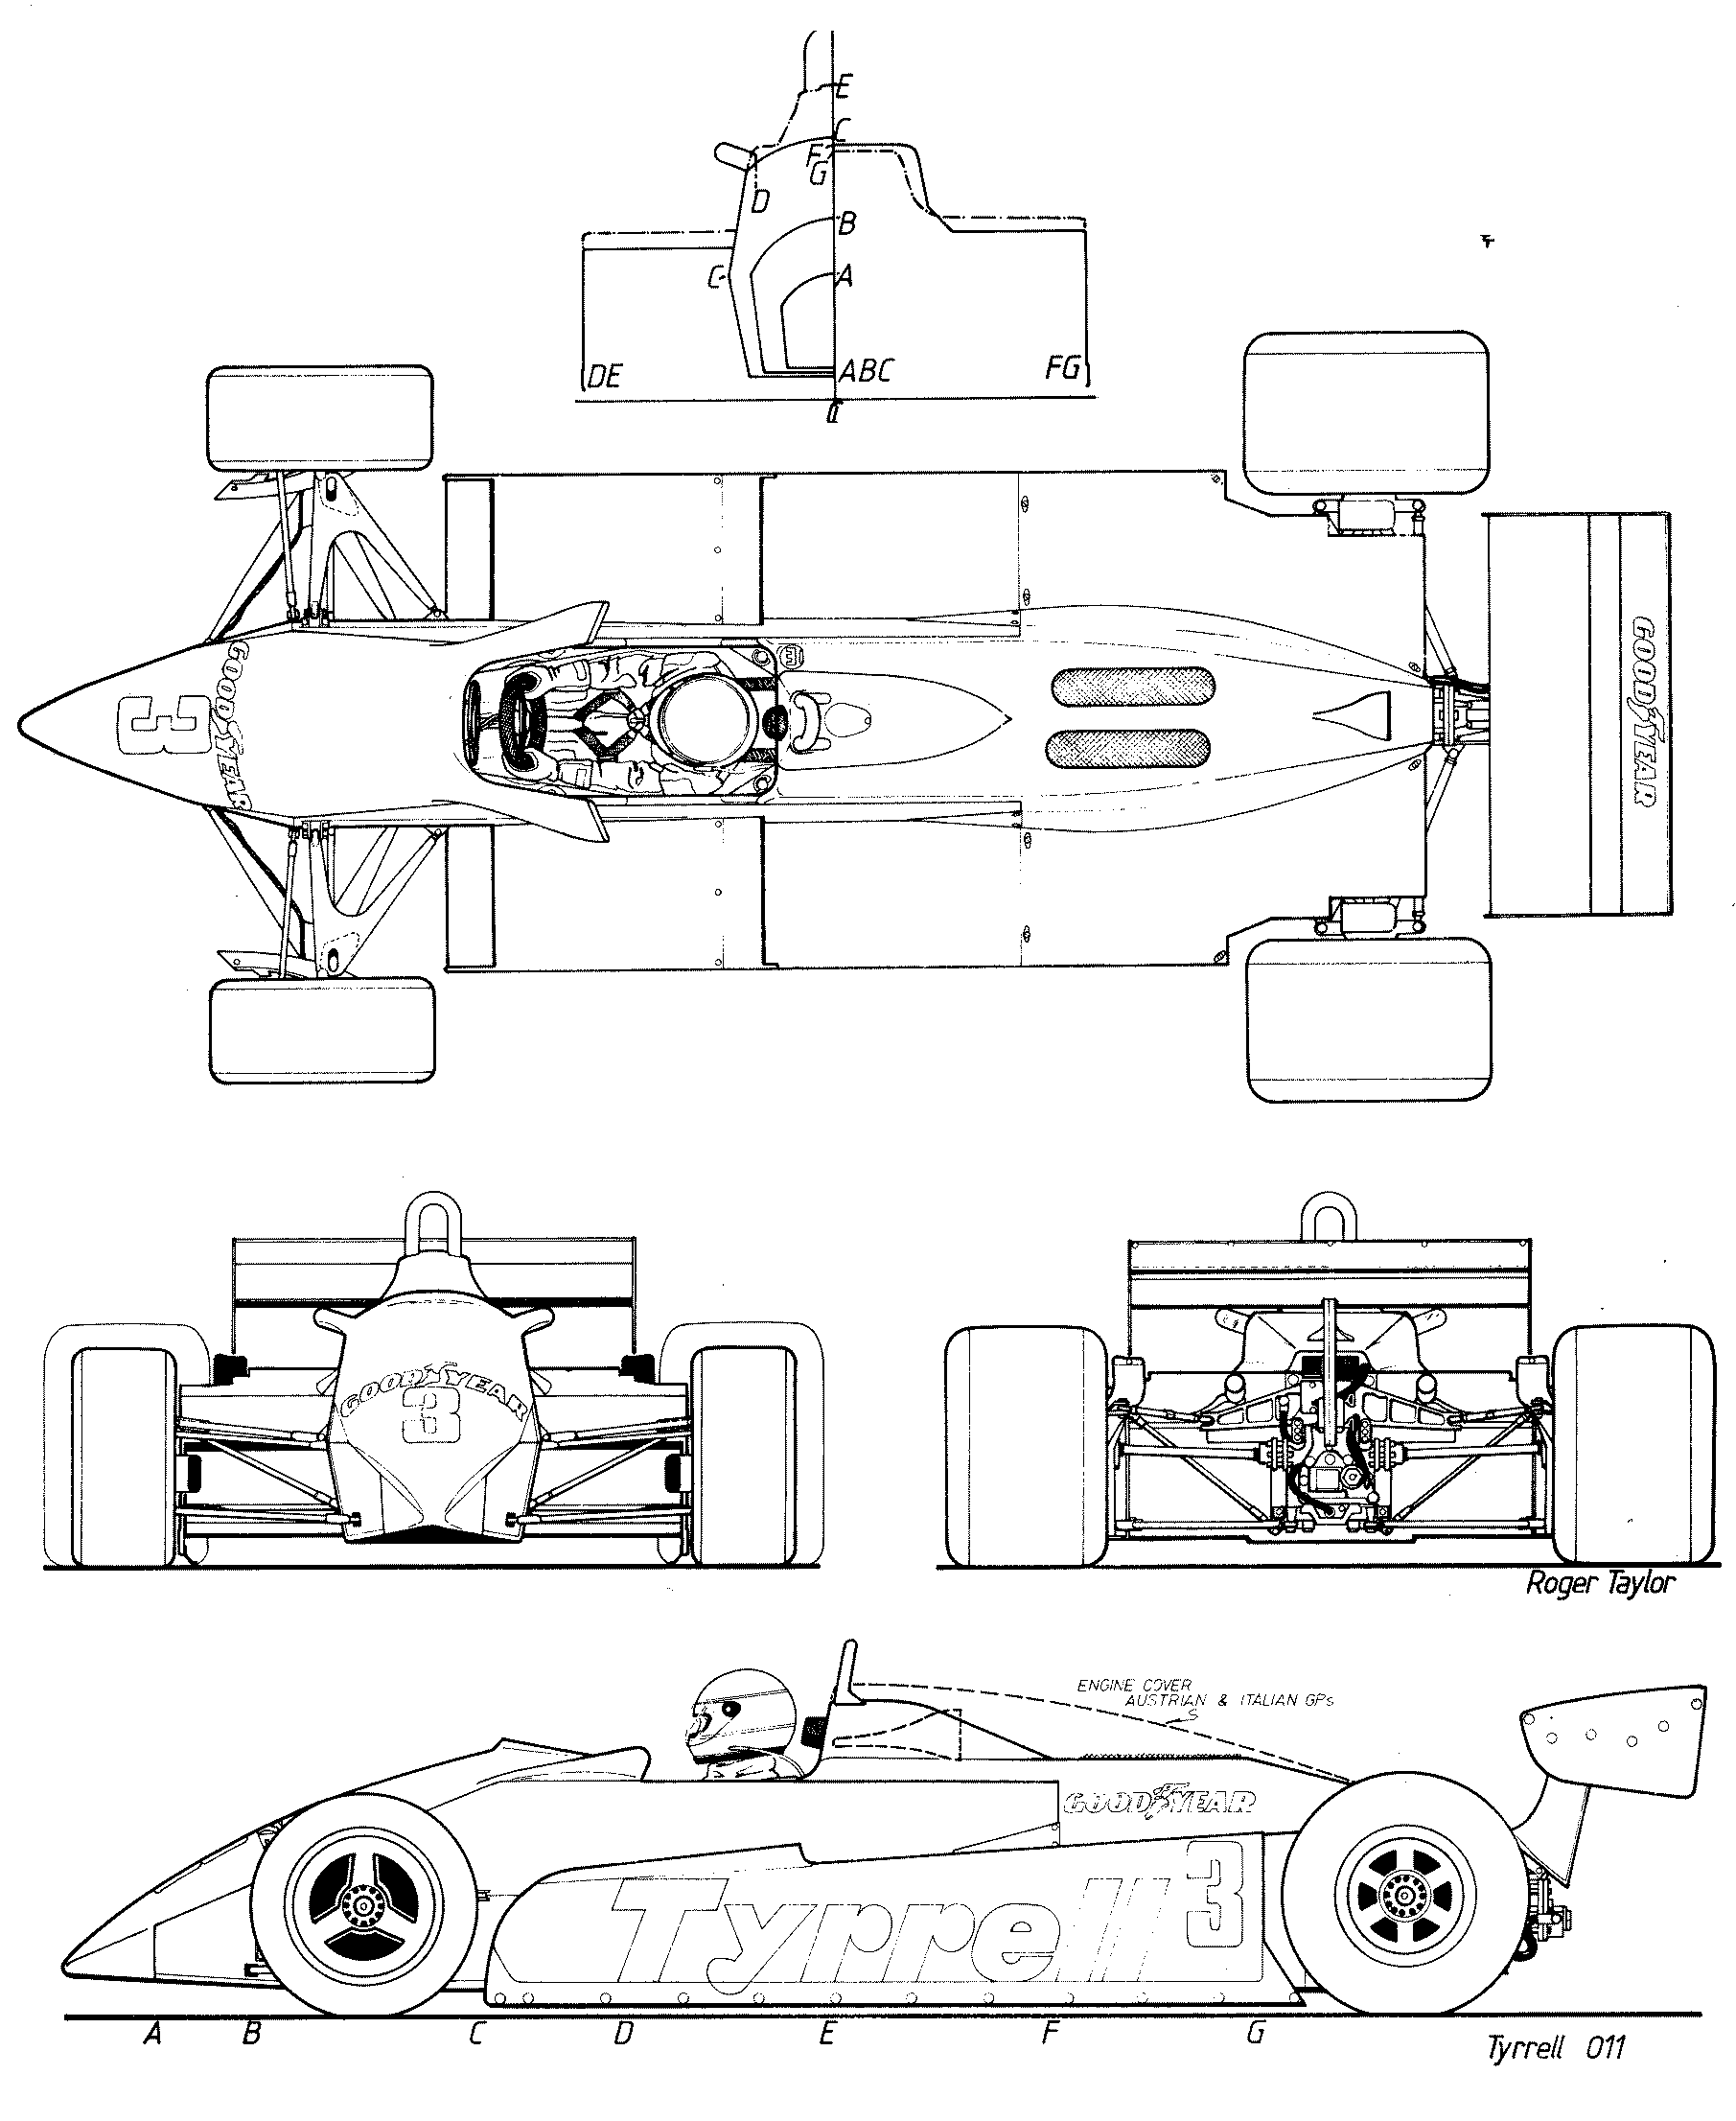 Tyrrell 011 blueprint